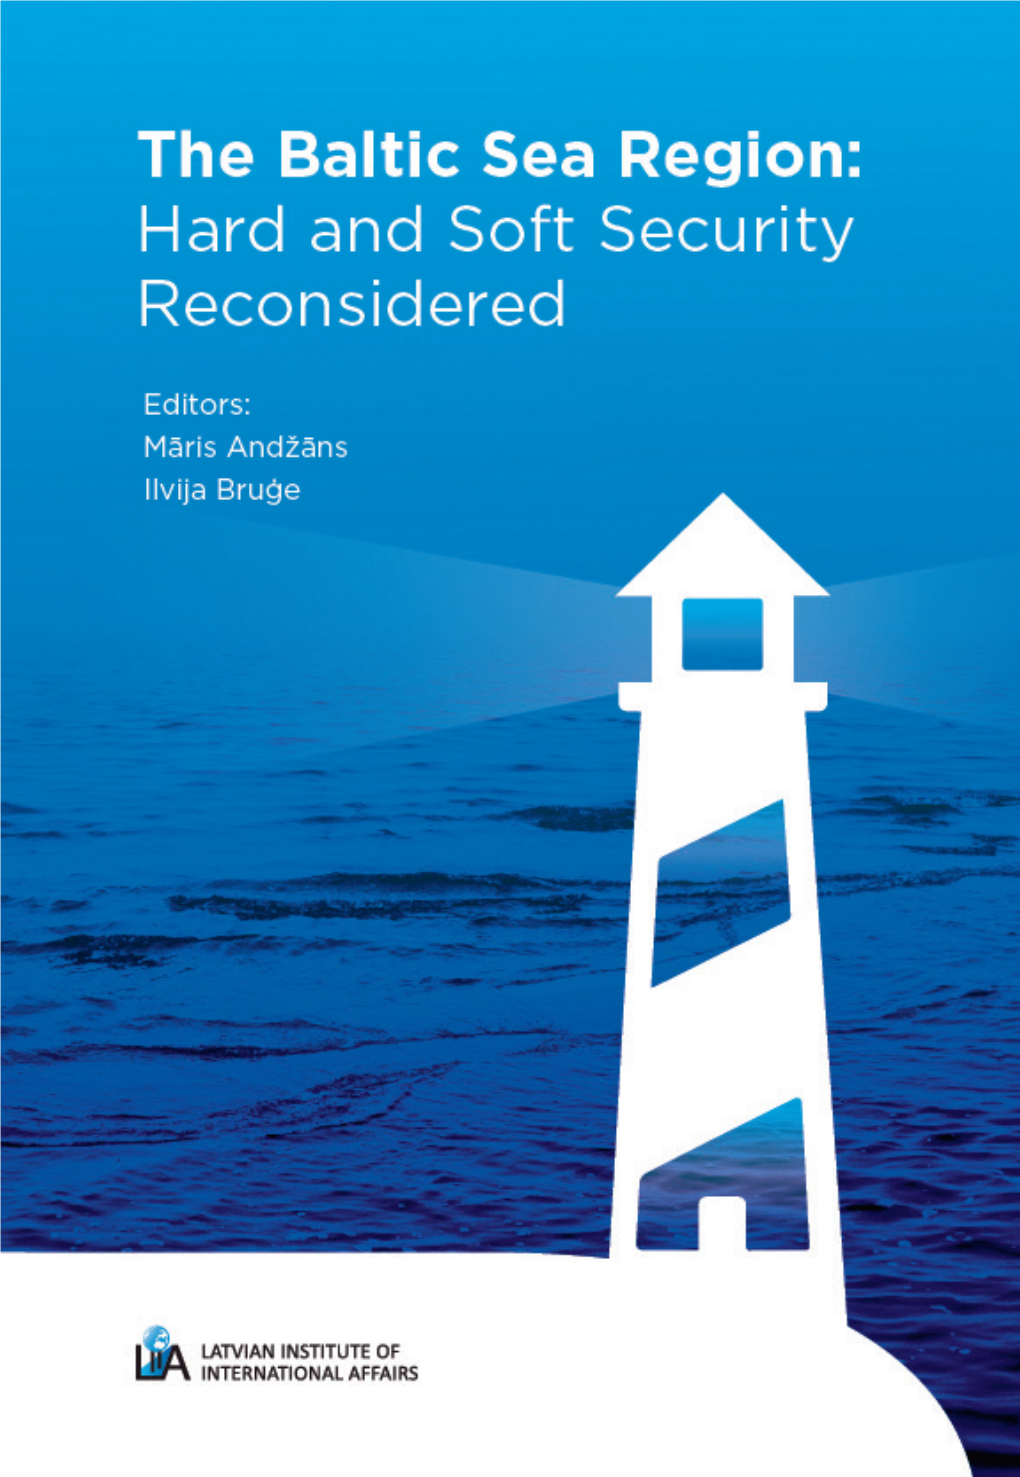 Societal Security: an Emerging Field of Scholarship Underpinning Practices in the Baltic Sea Region Bengt Sundelius